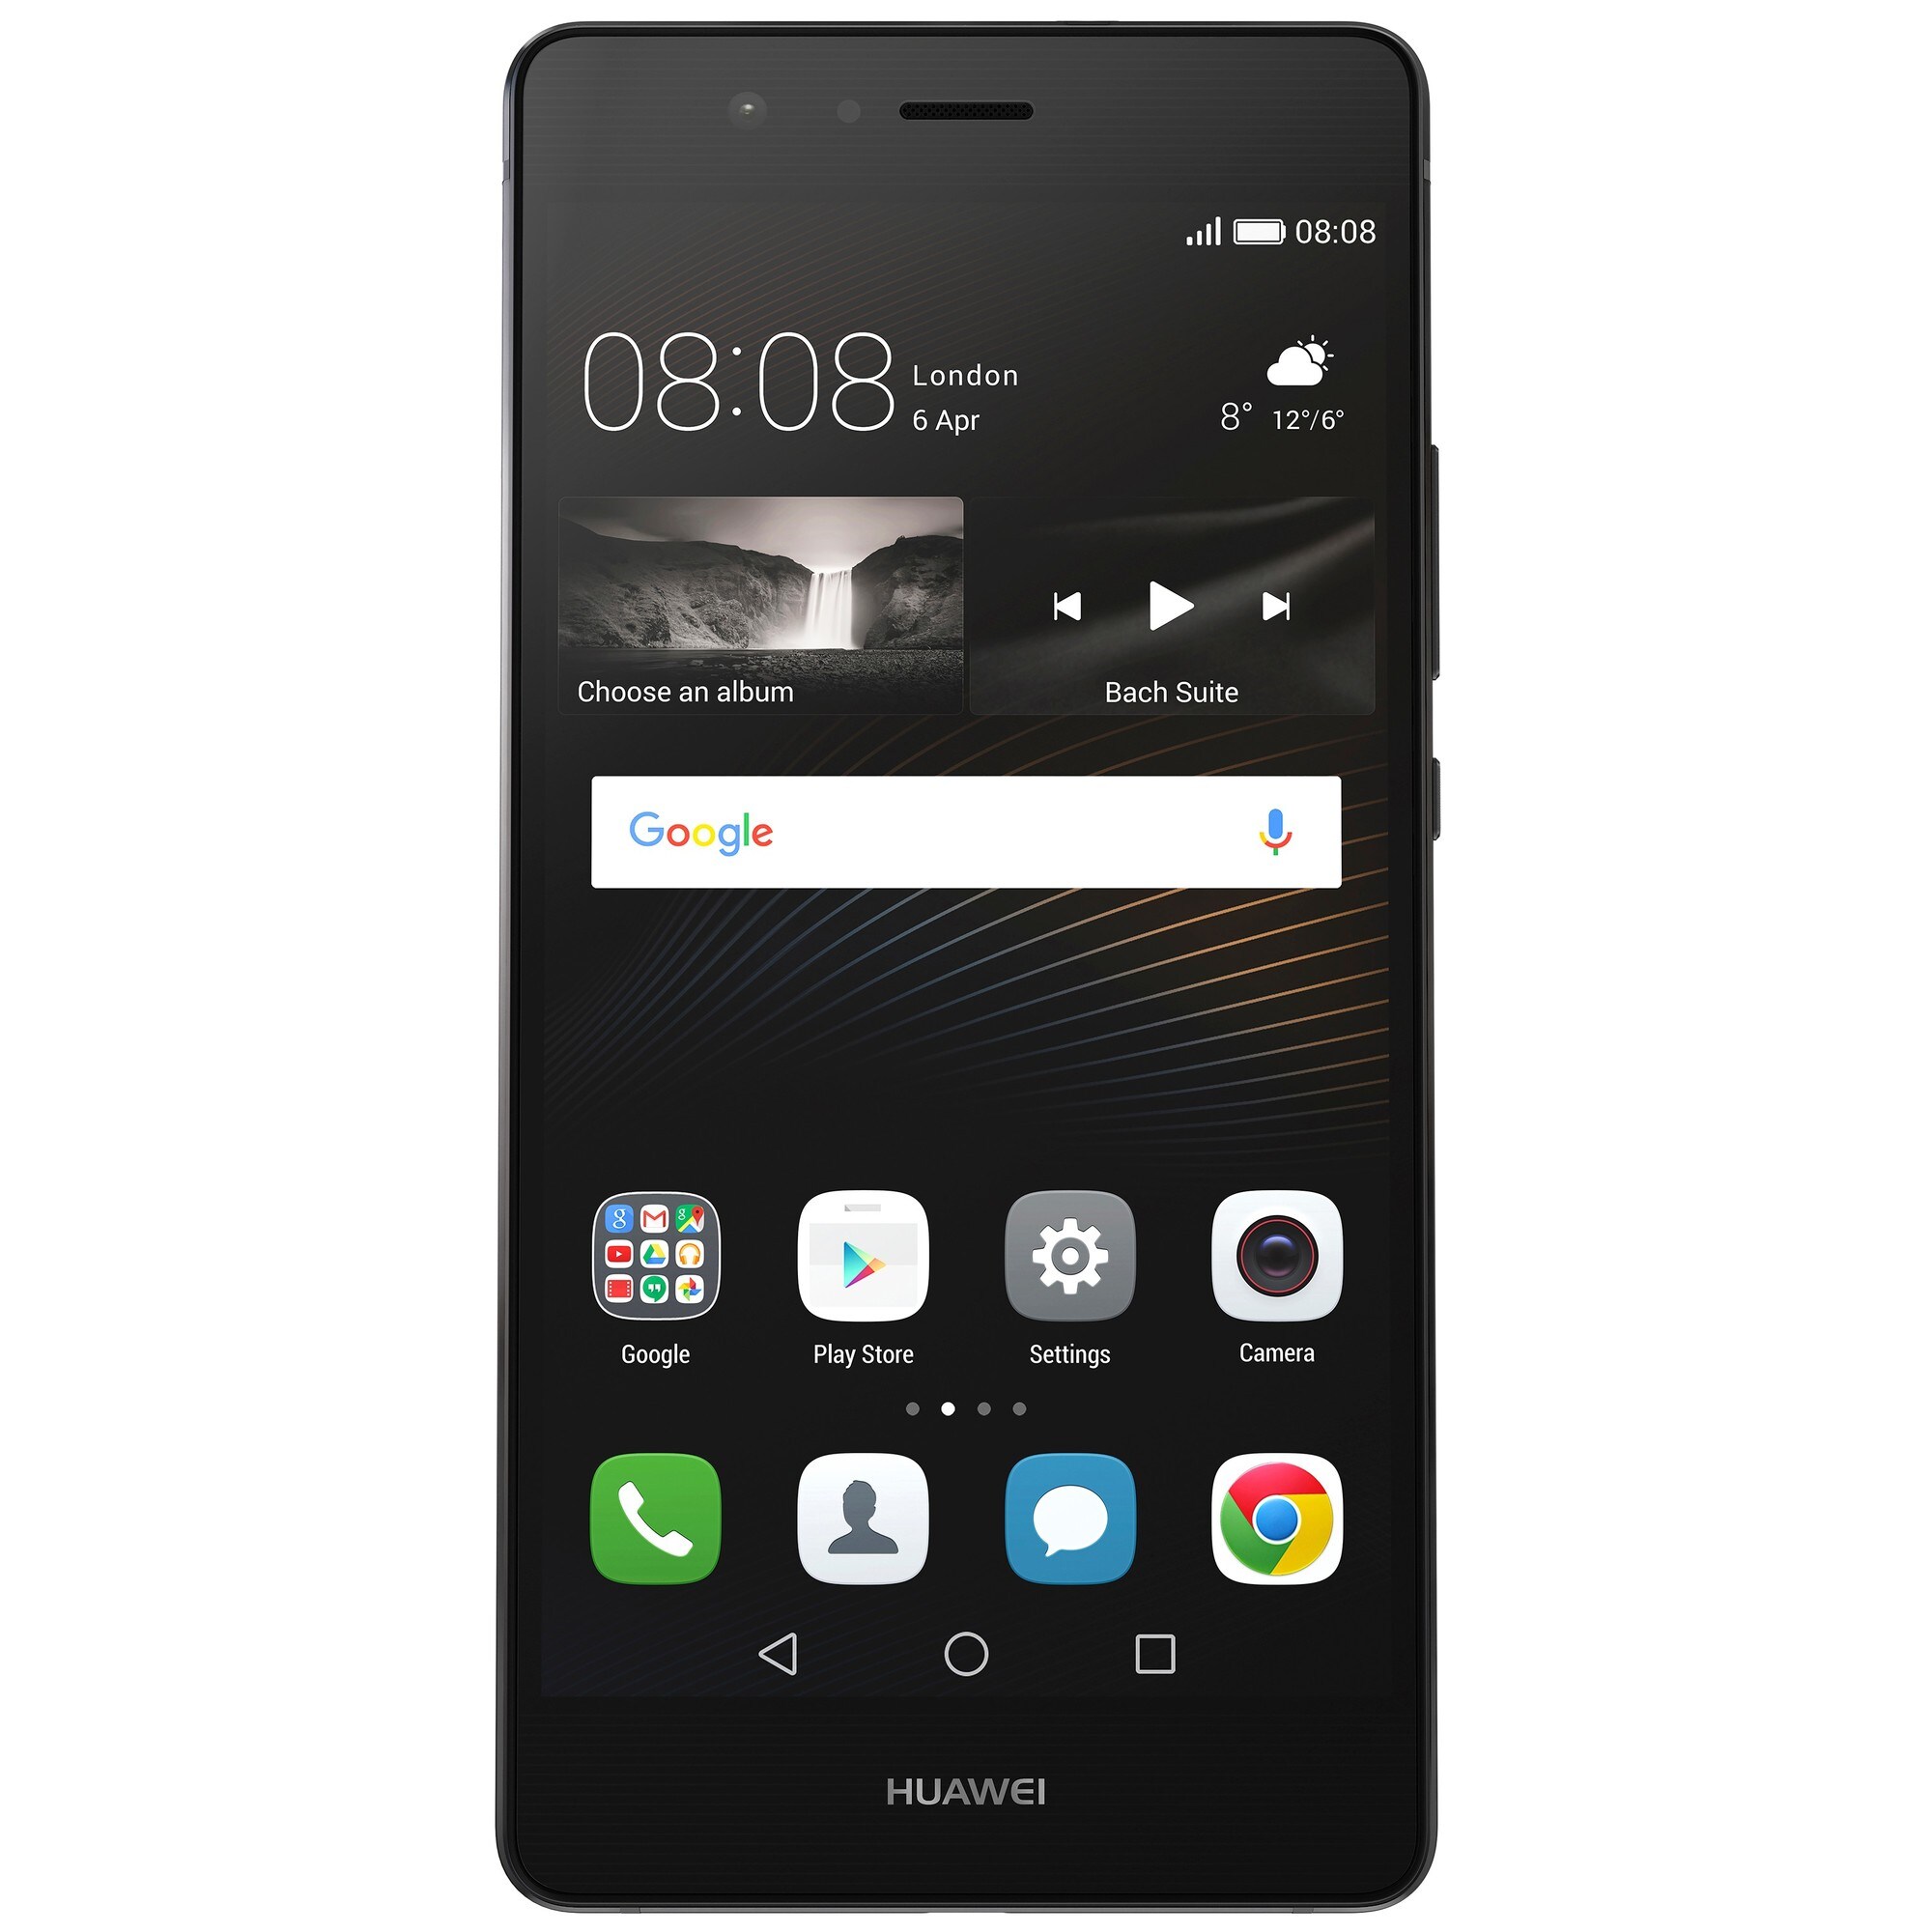 Huawei P9 Lite dual-sim smarttelefon (sort) - Mobiltelefon - Elkjøp